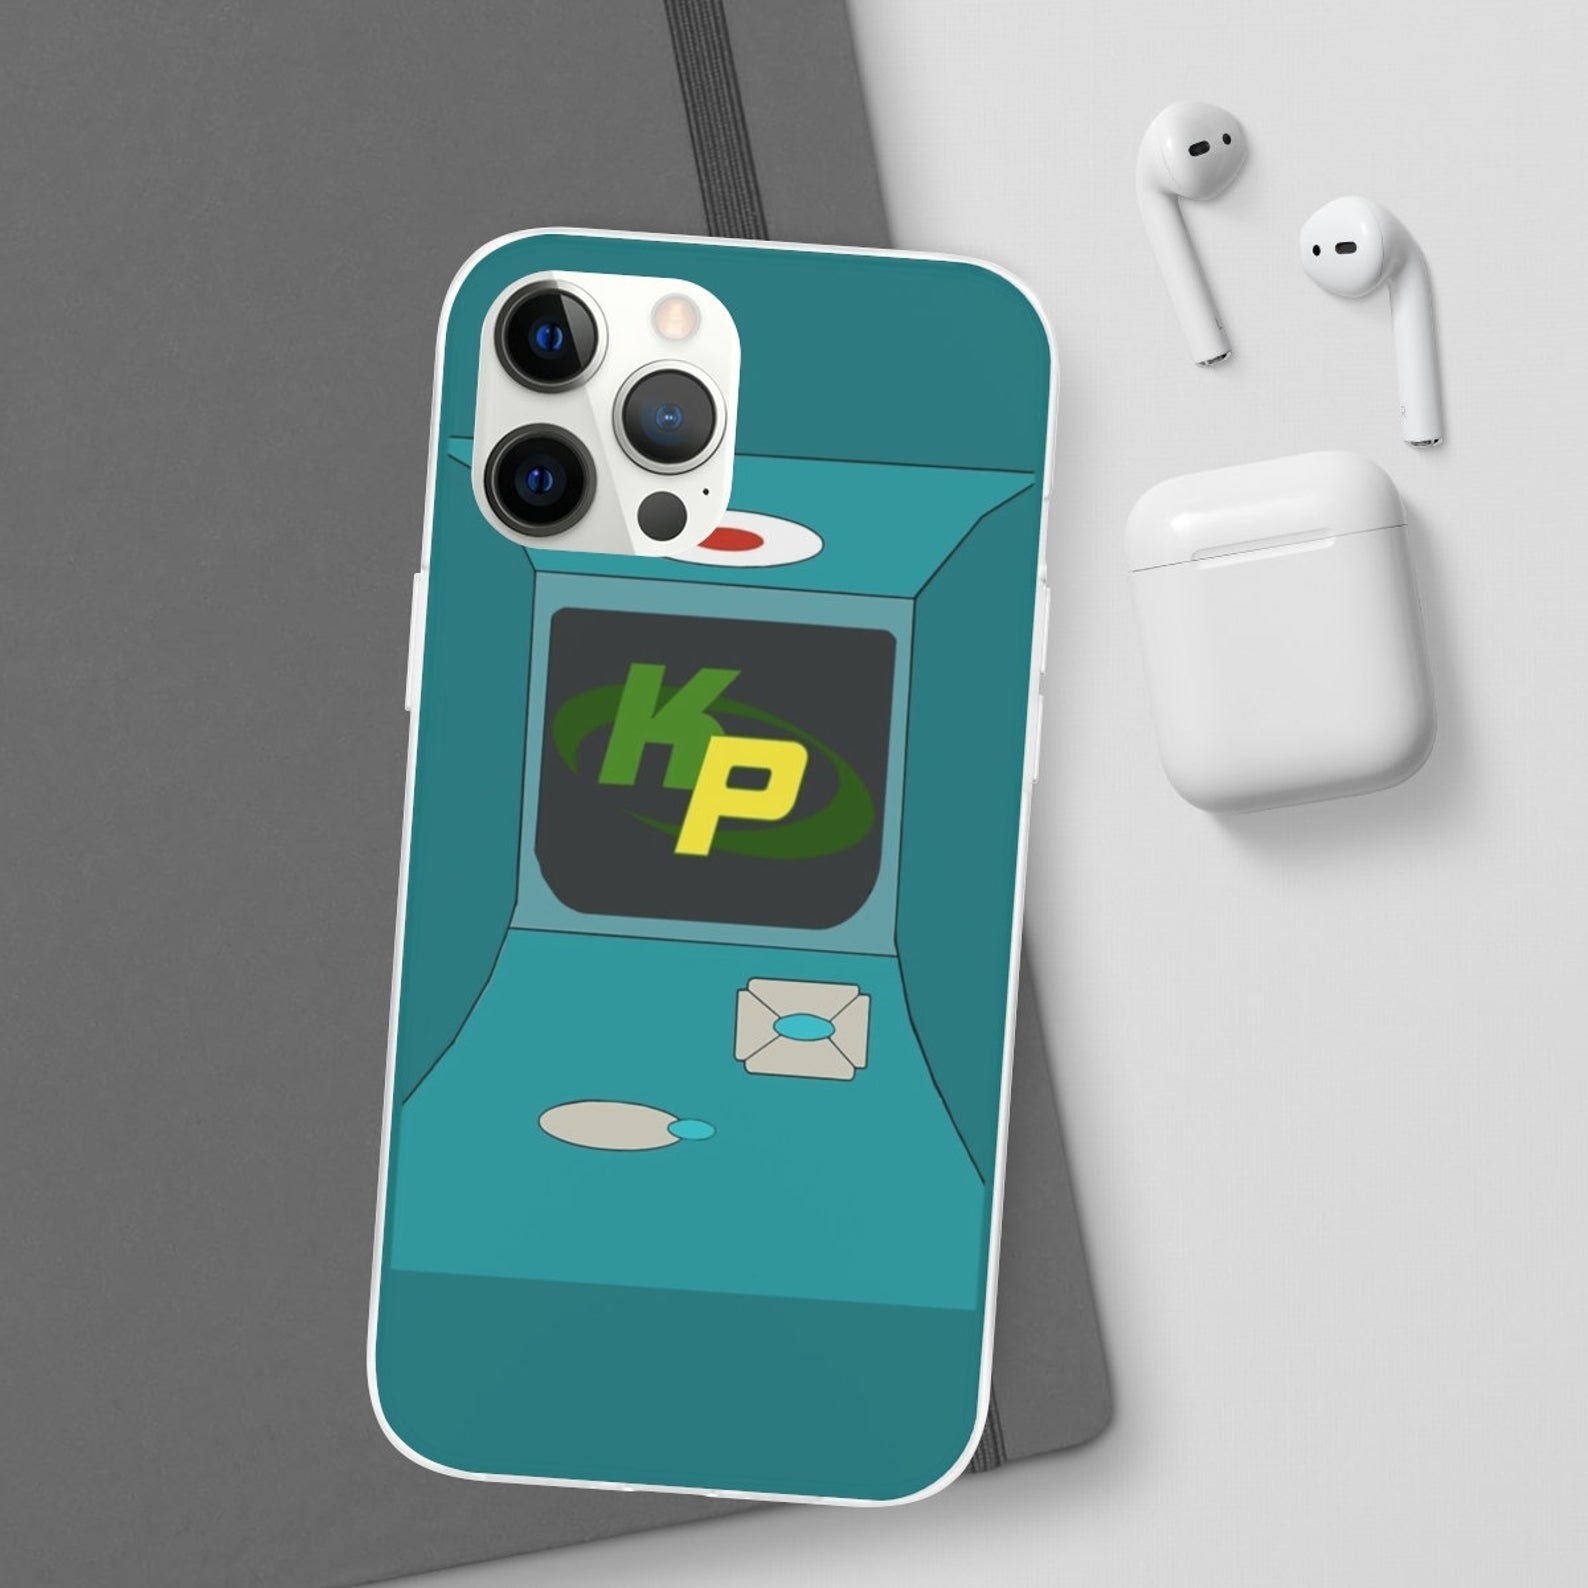 Kimmunicator-themed phone case placed on iPhone